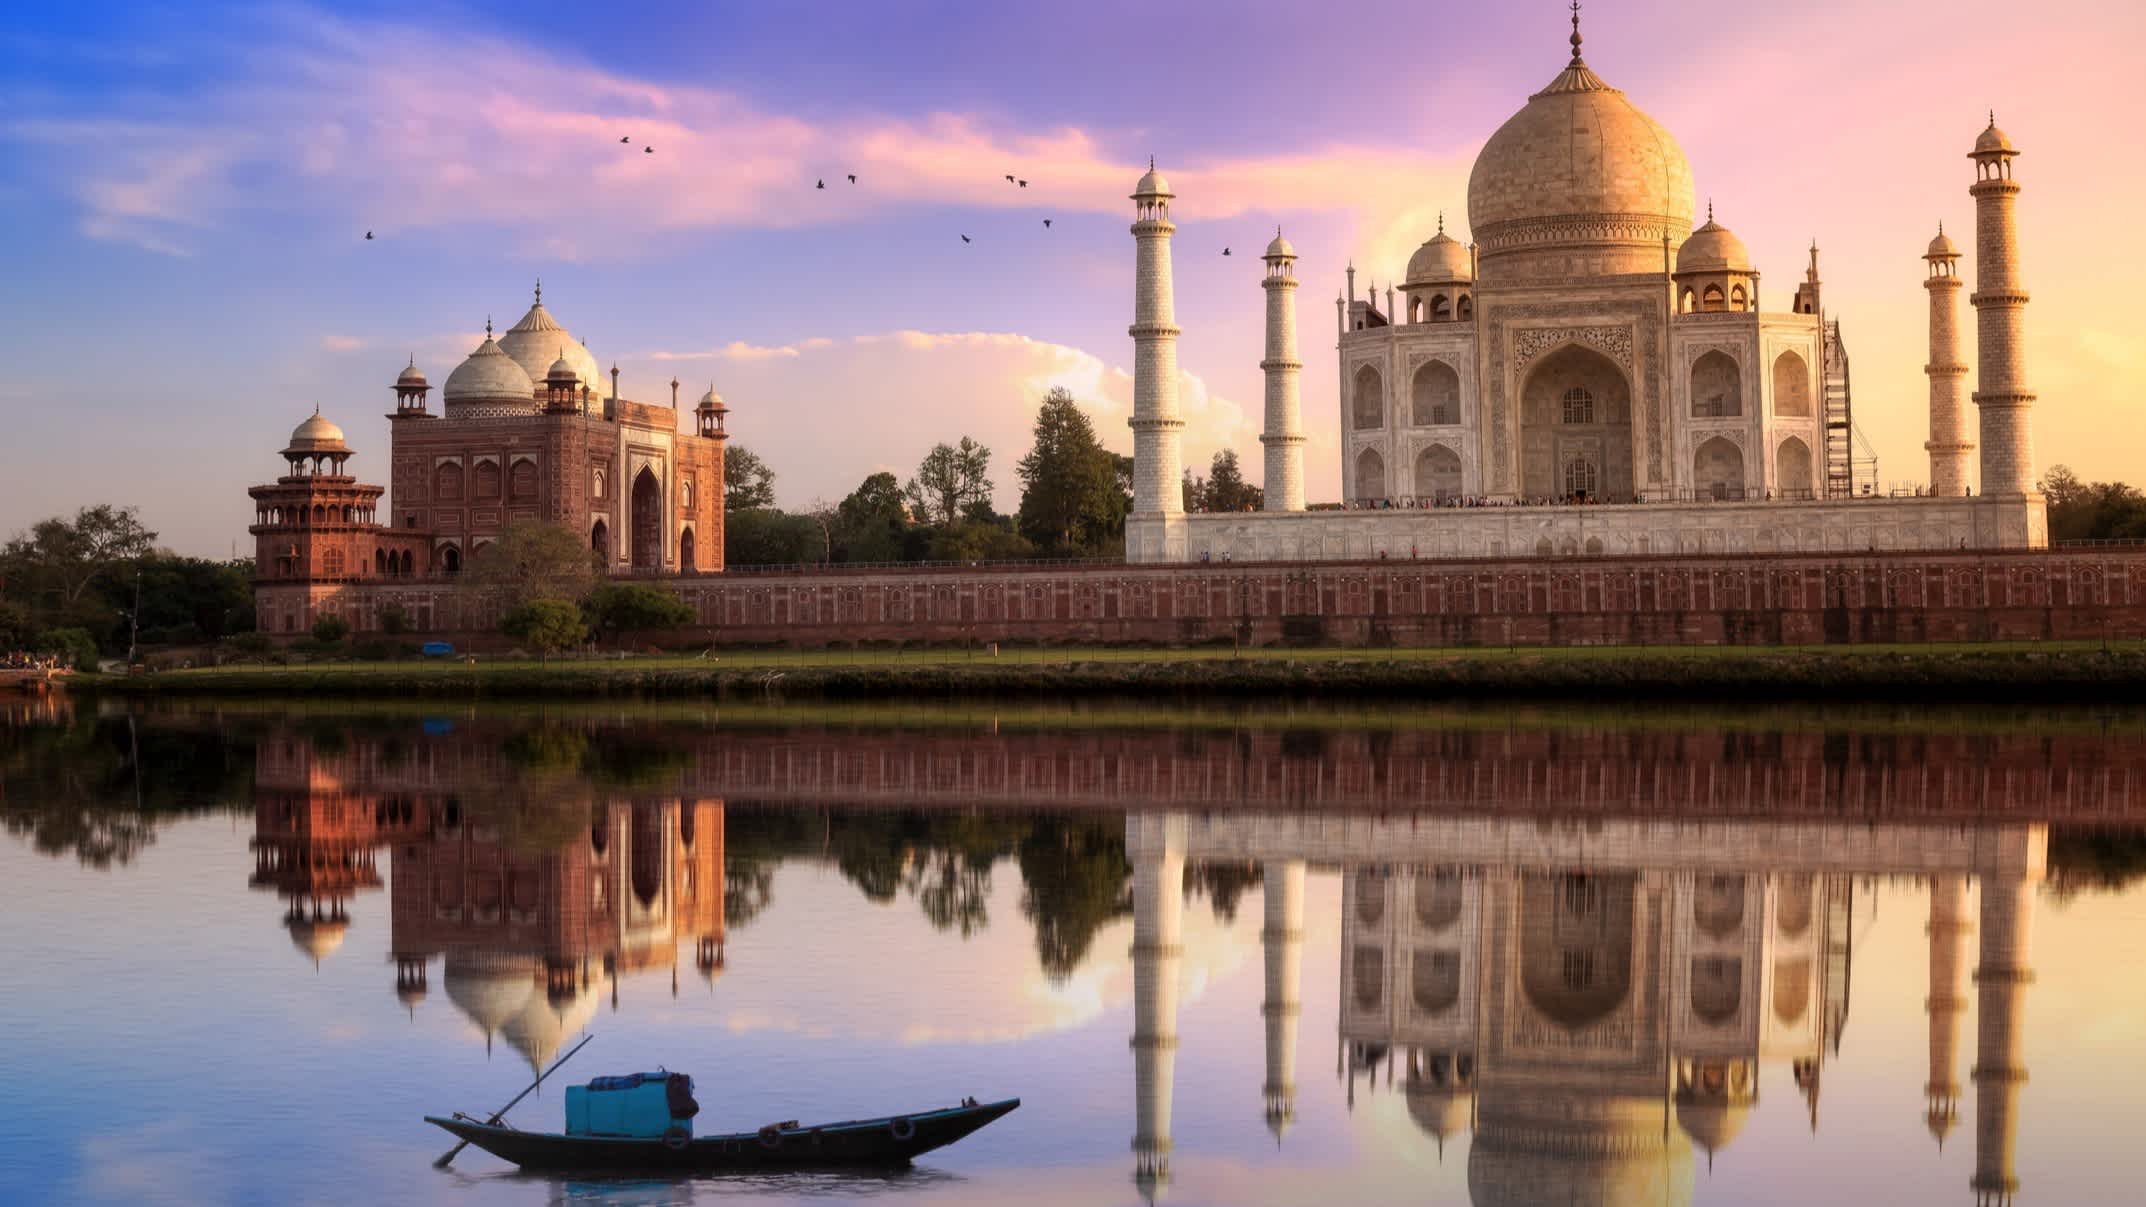 Taj Mahal am Ufer des Flusses Yamuna bei Sonnenuntergang, Agra, Indien